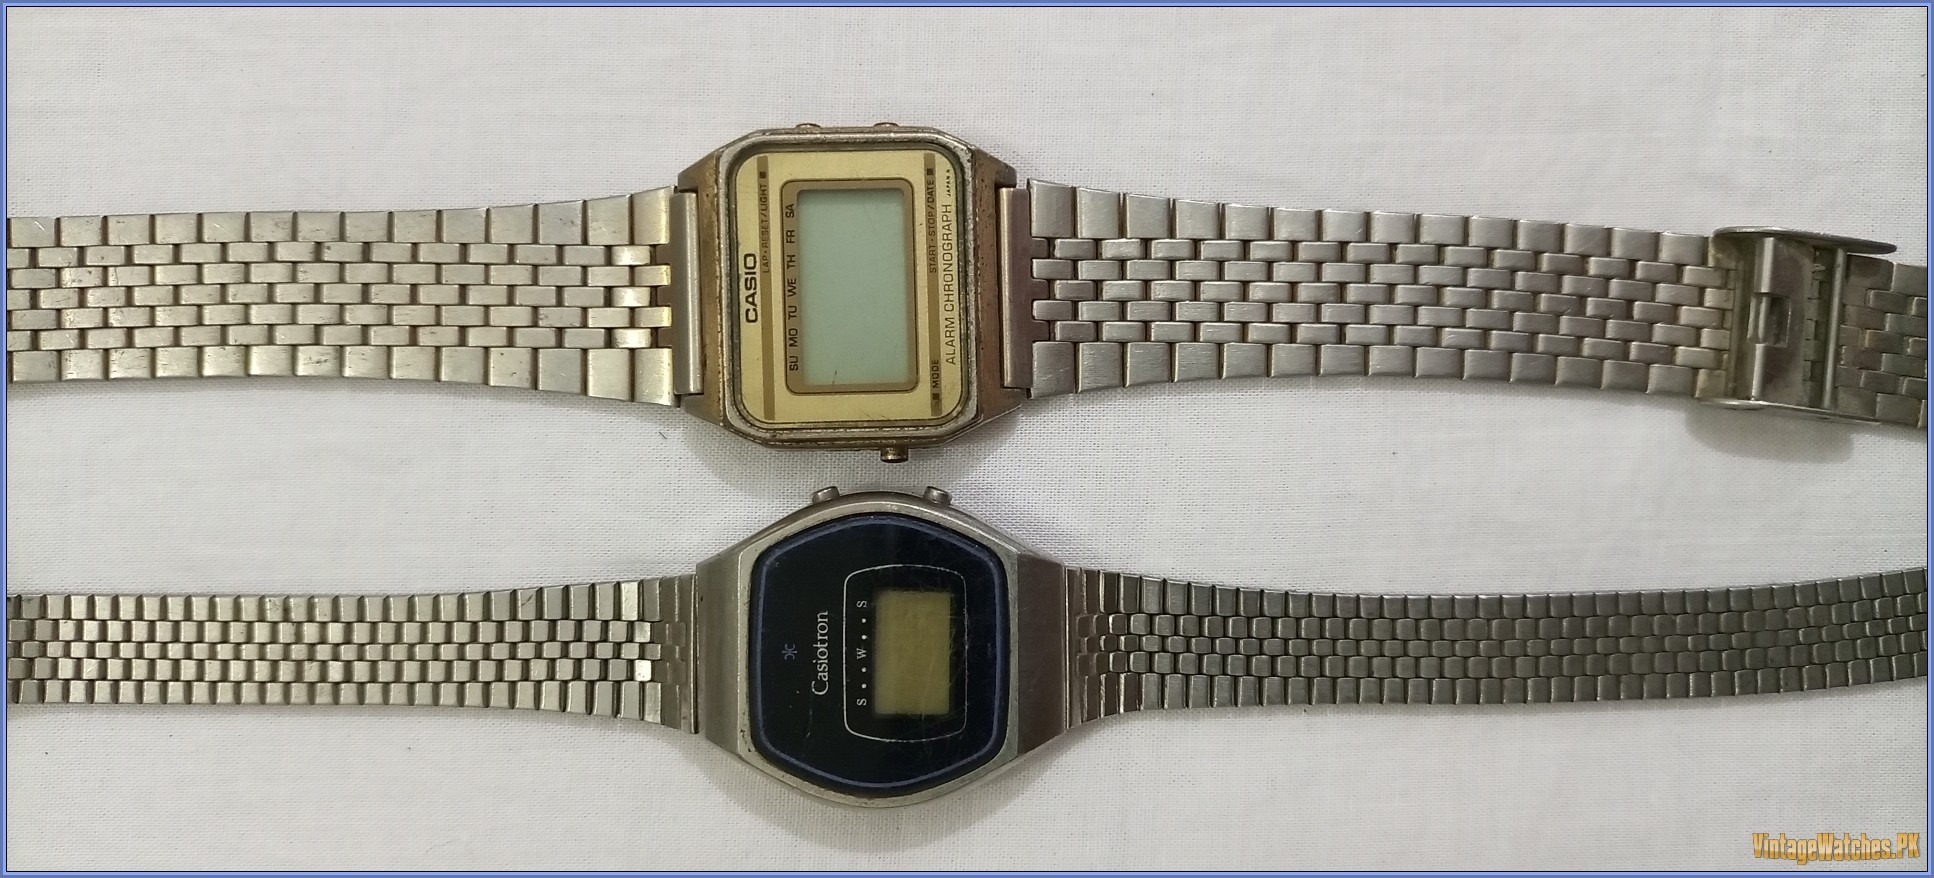 Lot 6 Branded Antique Vintage Rare OLD Digital Watch Casio Seiko Citizen Japan - PK00010-IMG_20221009_192113_945 - VintageWatches.PK